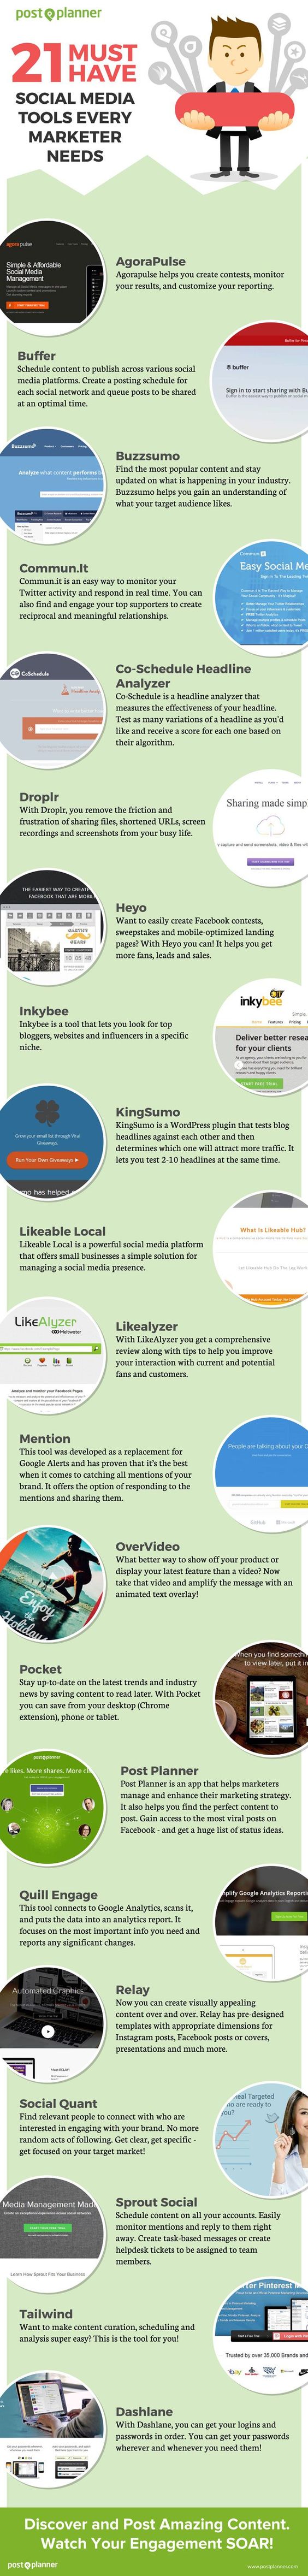 21 Social Media Tools for Smart Marketers